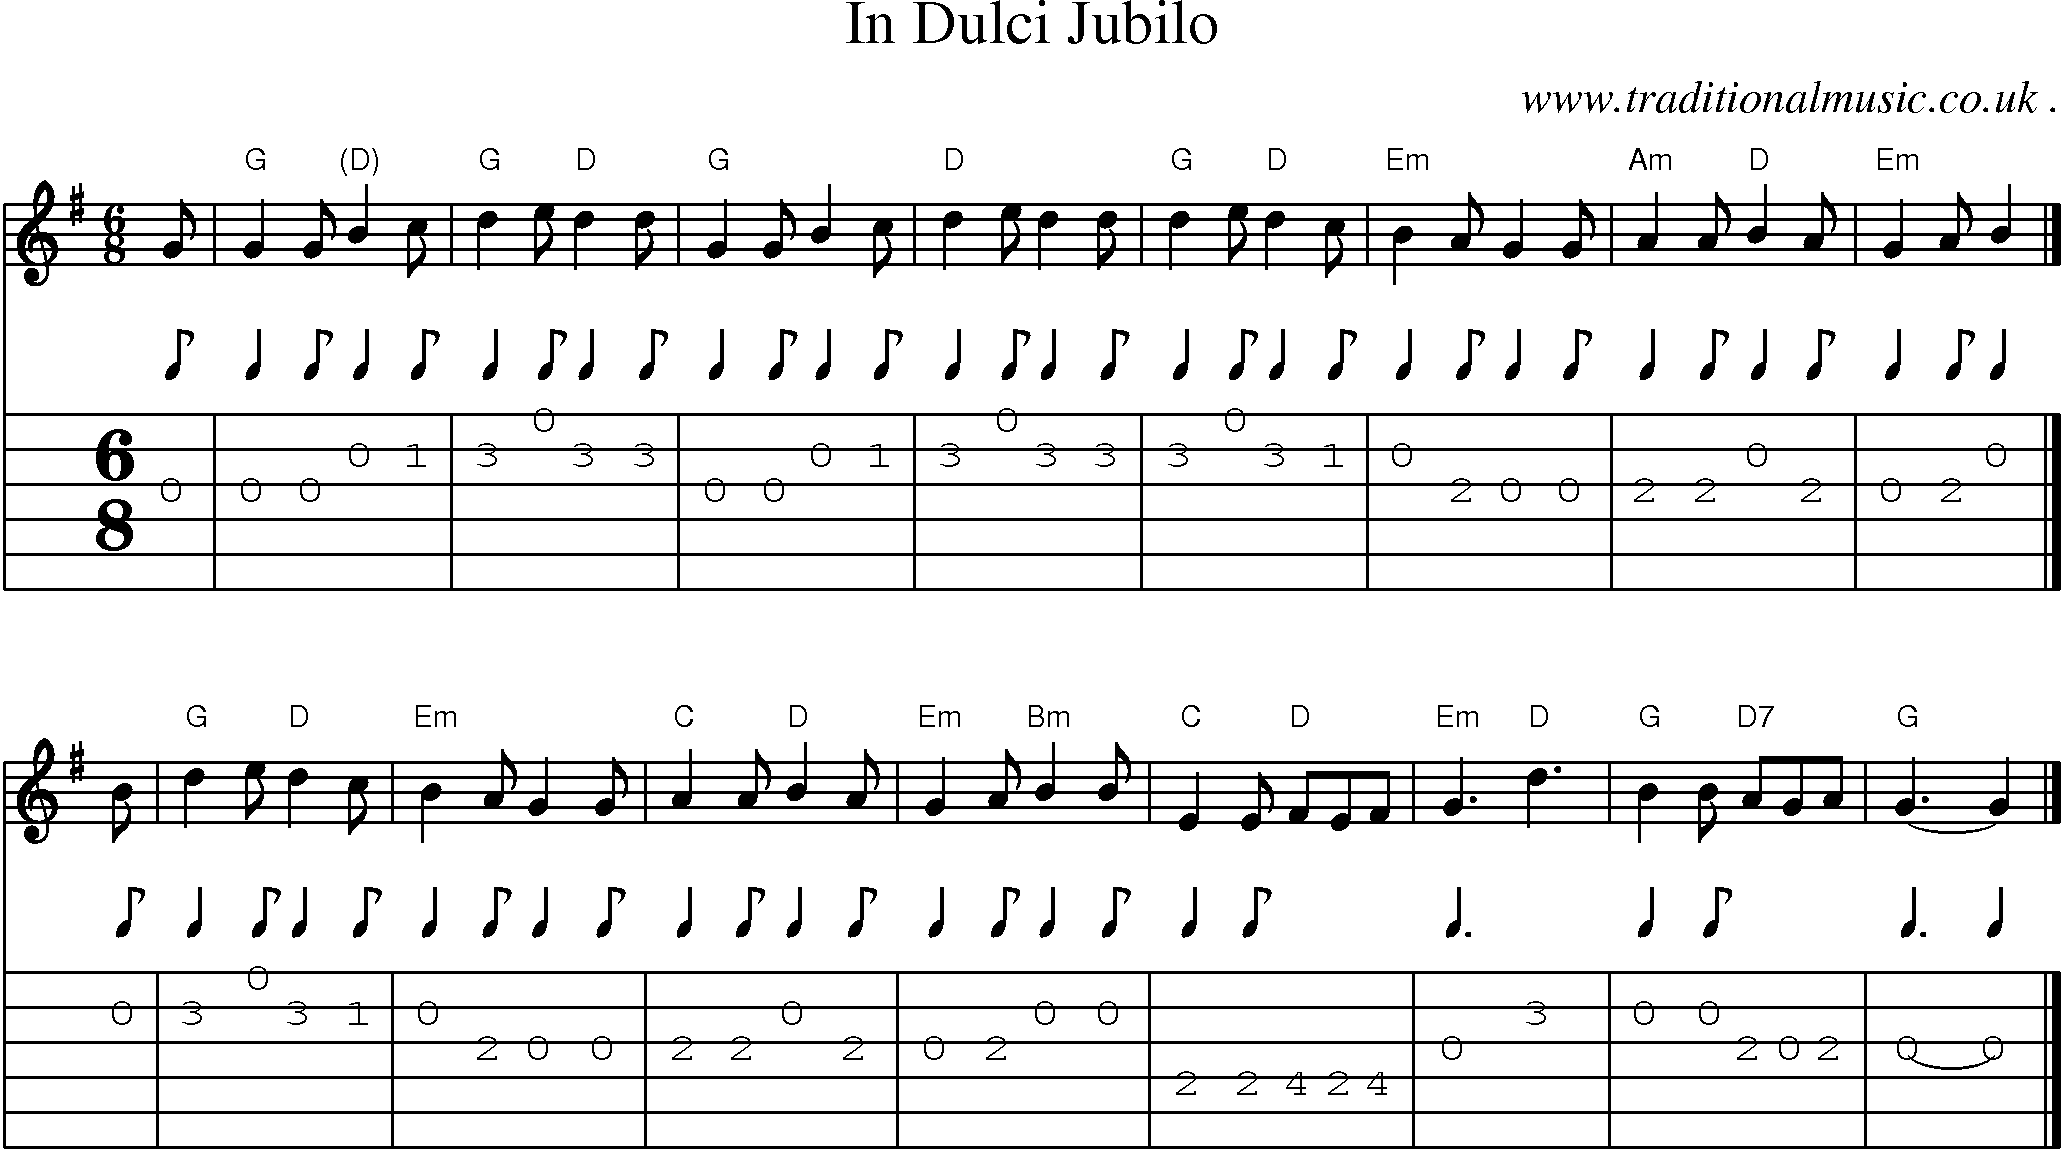 Sheet-music  score, Chords and Guitar Tabs for In Dulci Jubilo